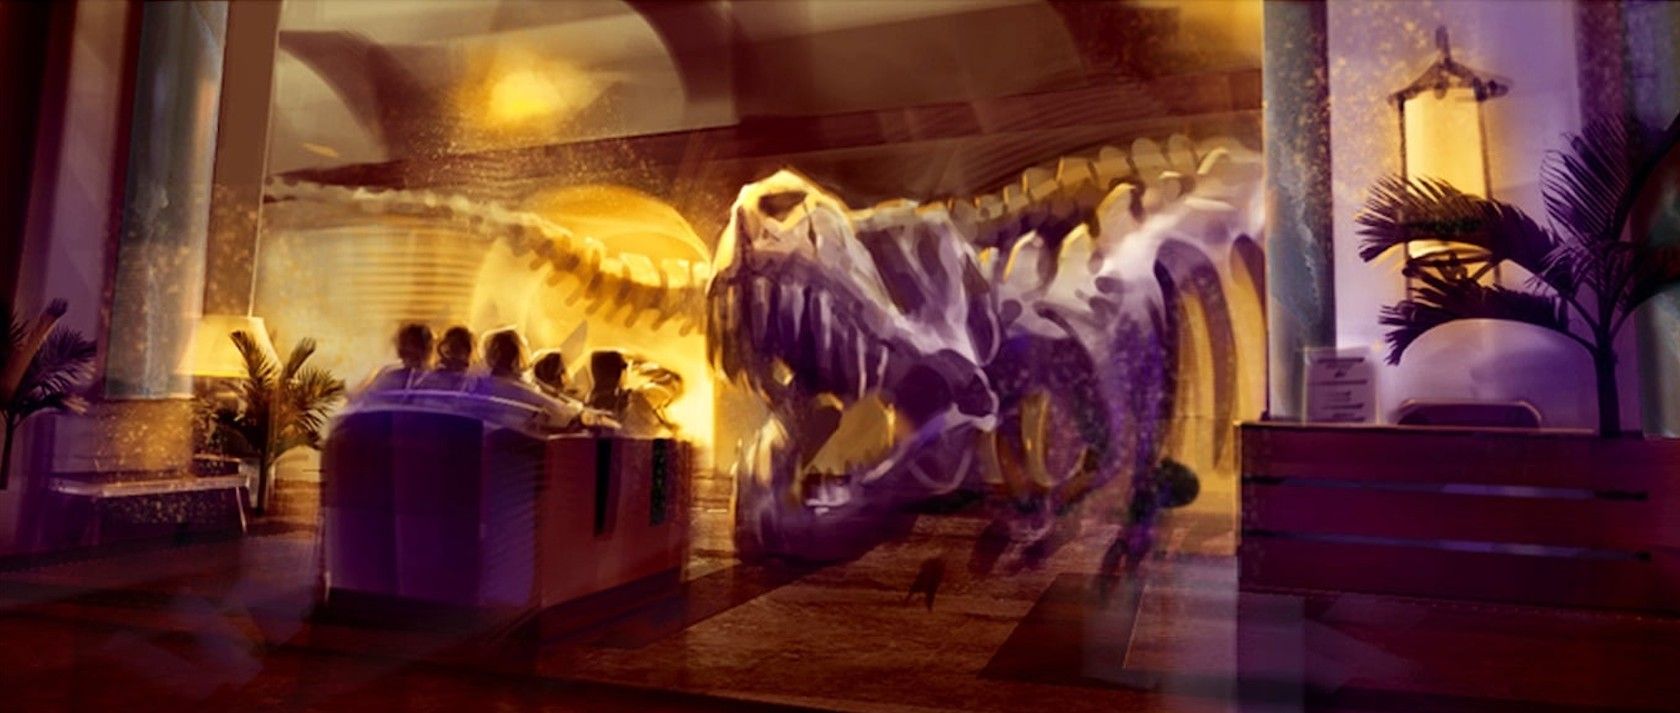 Night at the Museum Ride Concept Art Dinosaur